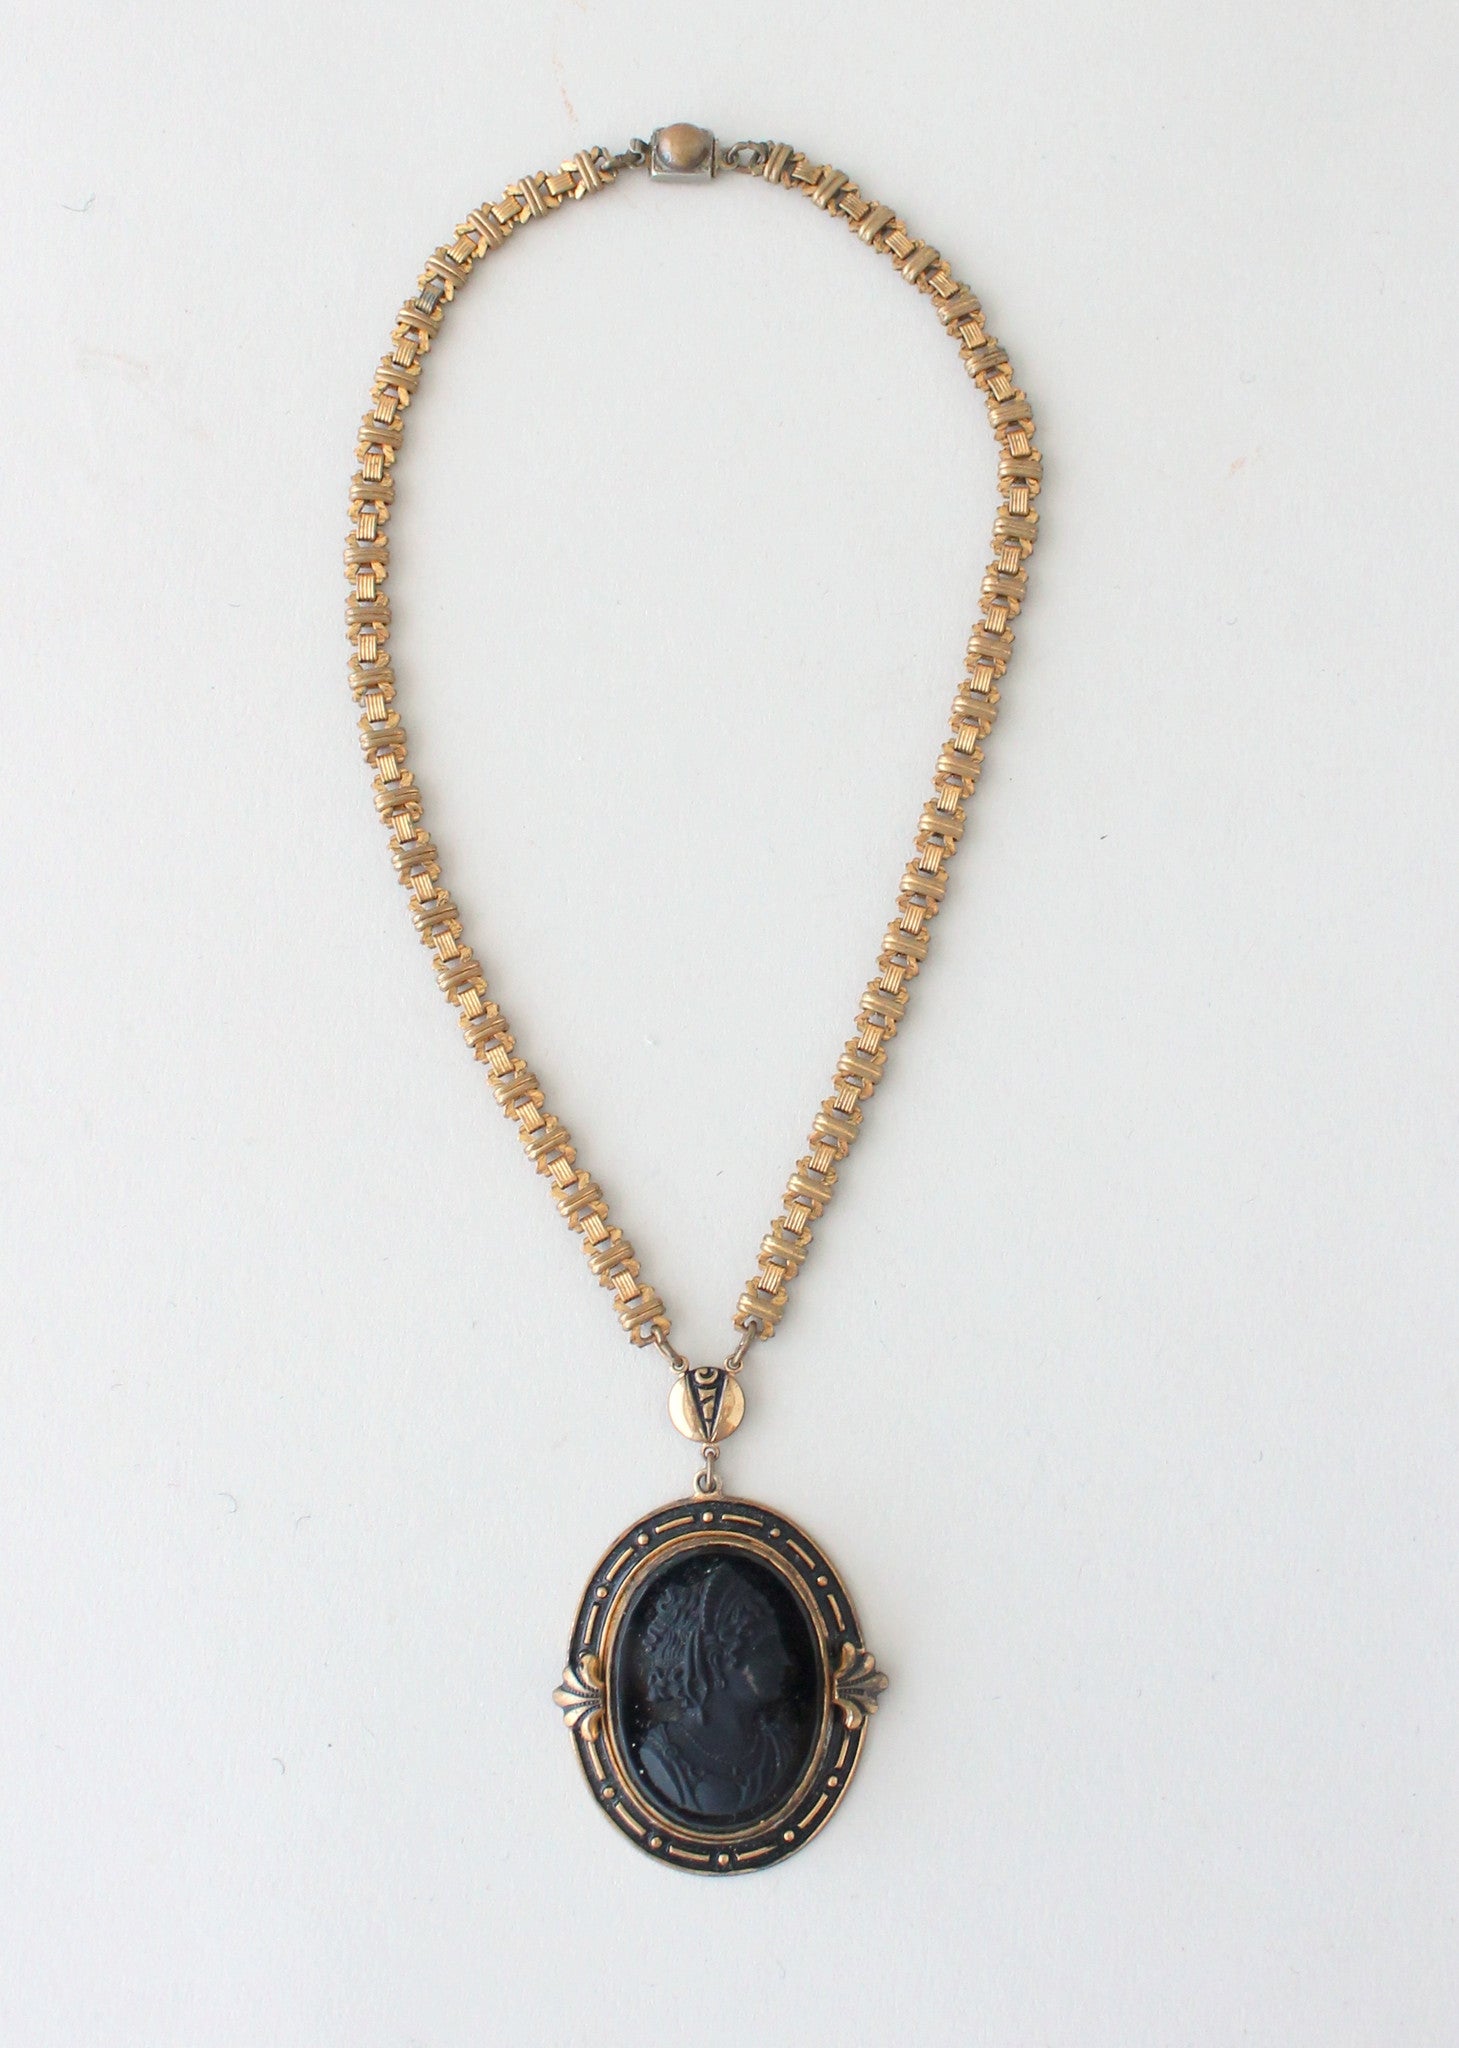 Vintage 1930s Victorian Revival Black Cameo Necklace - Raleigh Vintage